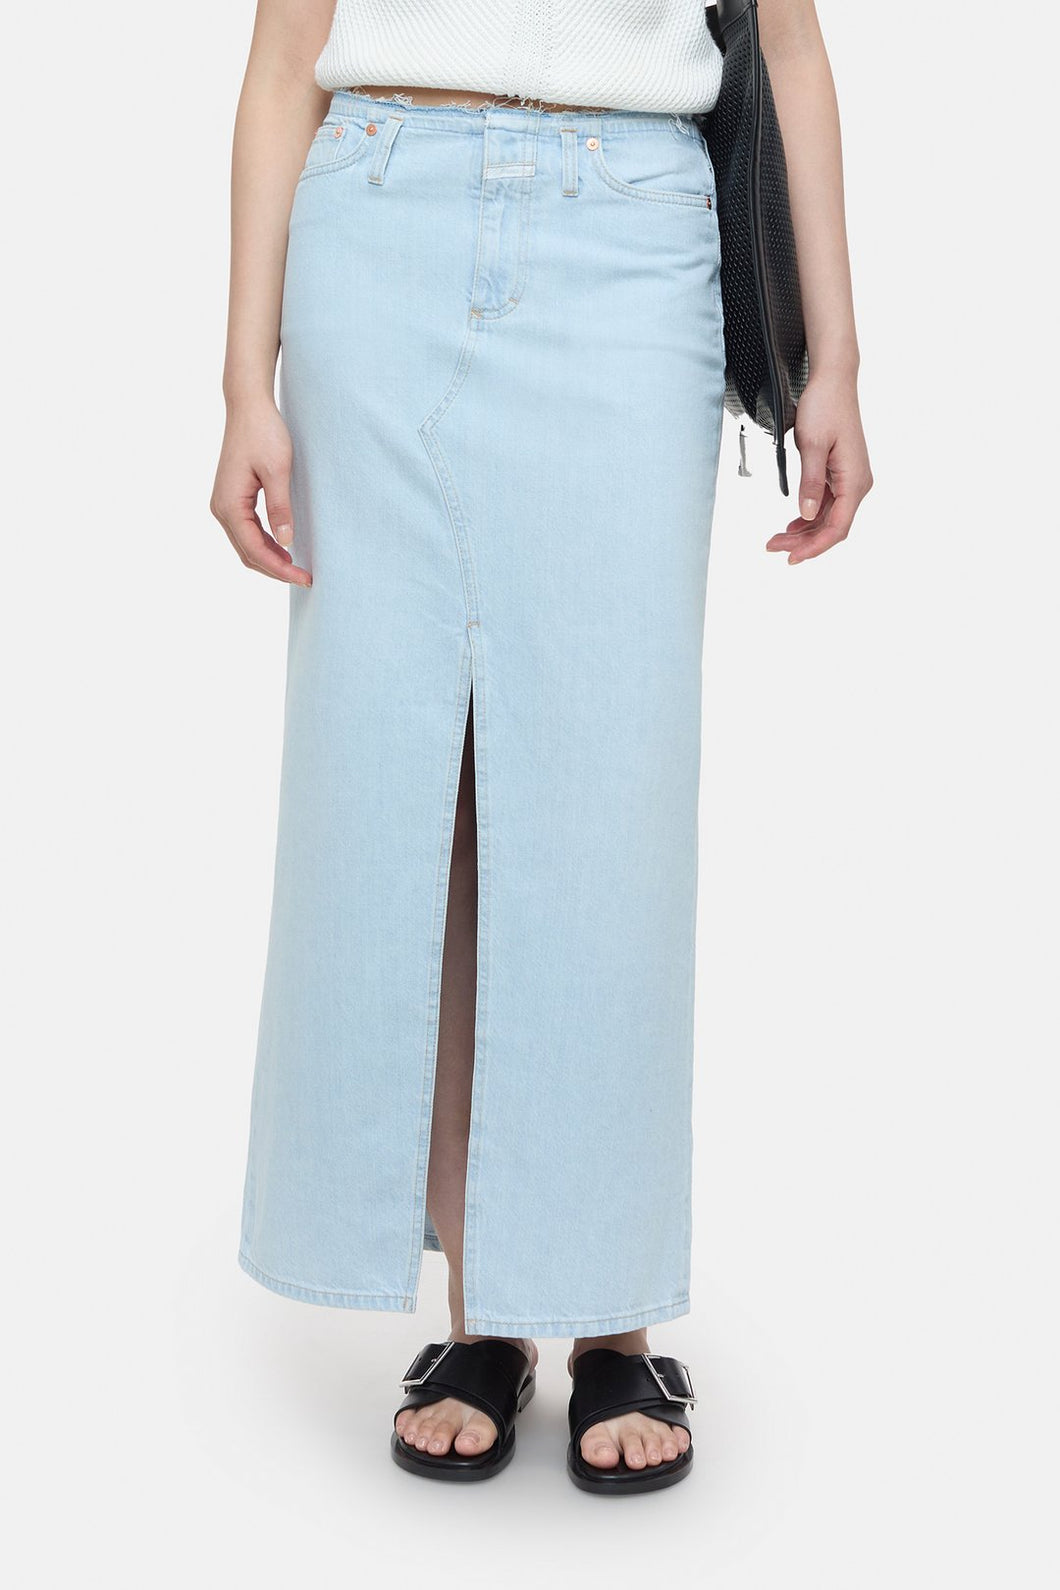 Closed  Long 5-pocket skirt C93178-18S-4W Col LBL light blue